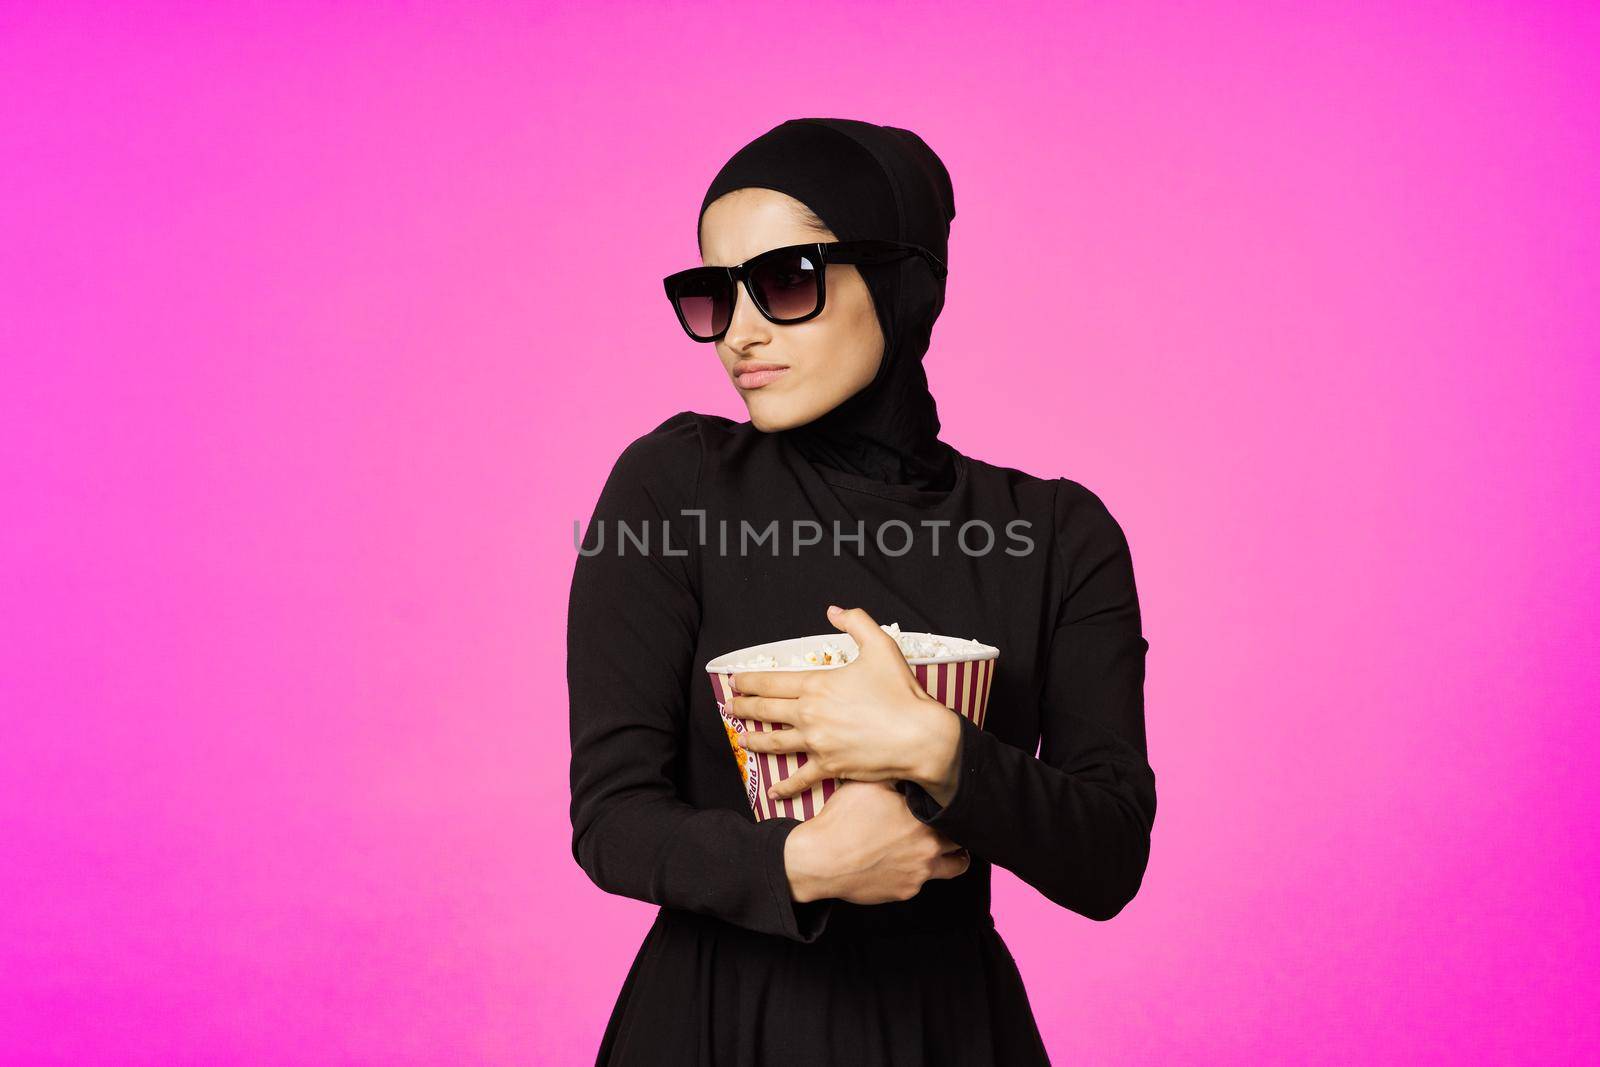 cheerful woman fun popcorn entertainment fashion model ethnicity by Vichizh